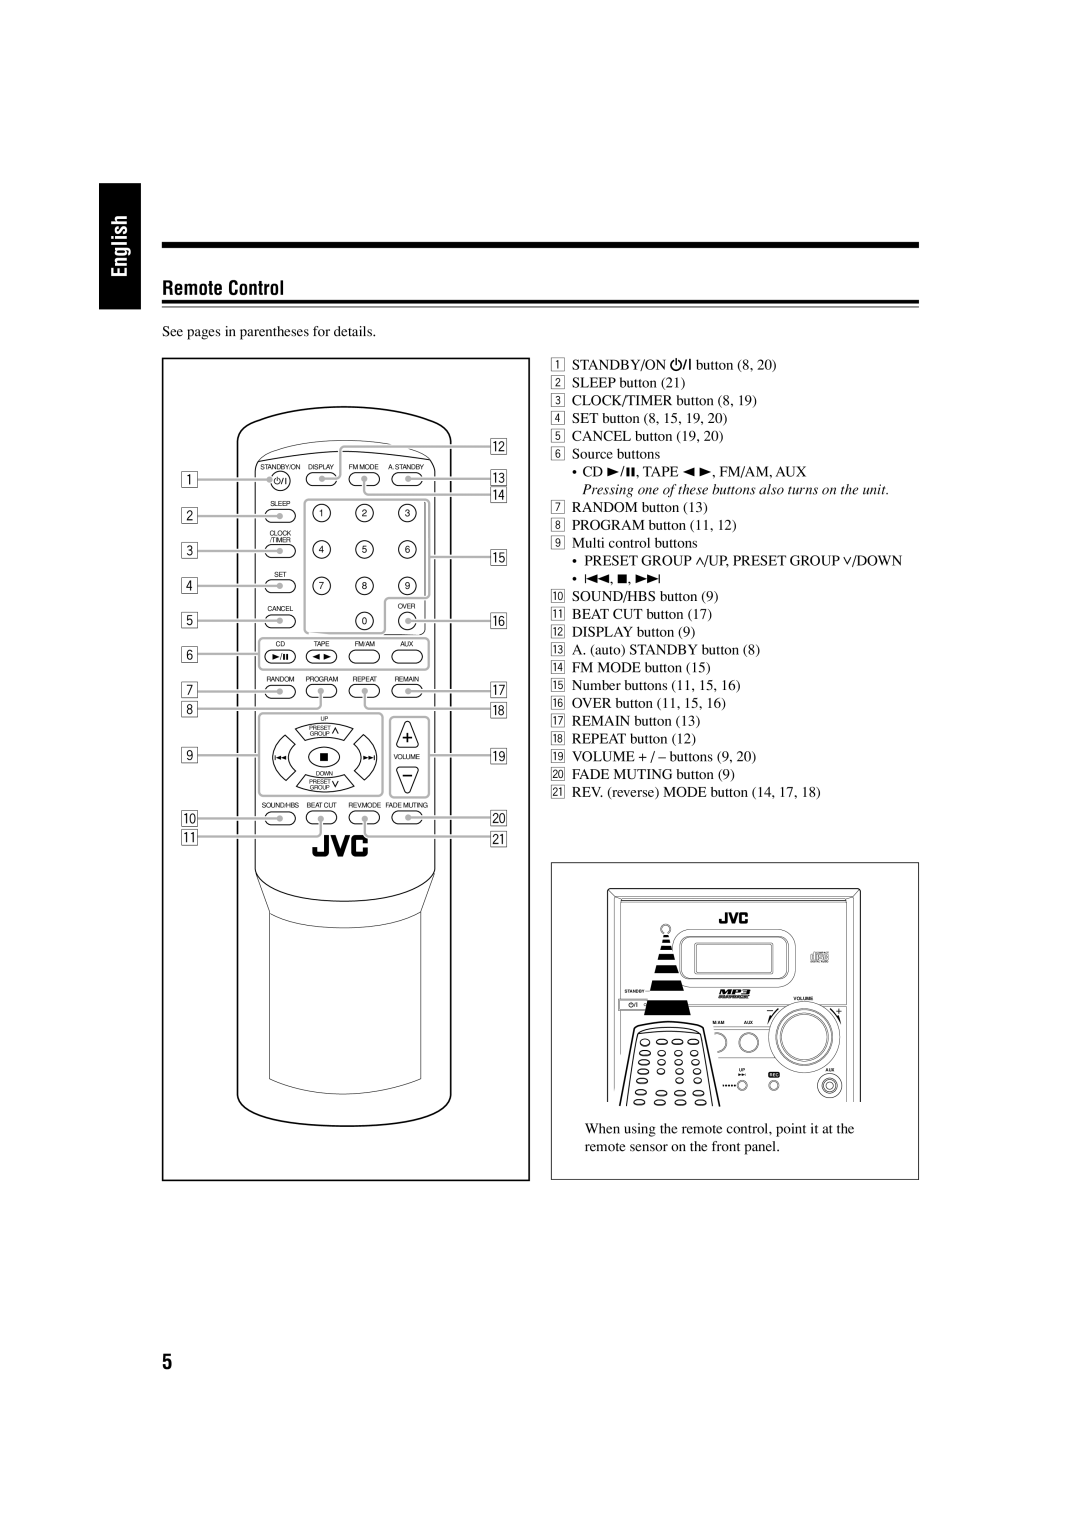 JVC FS-H300 manual English, Remote Control, Standby/On Display 